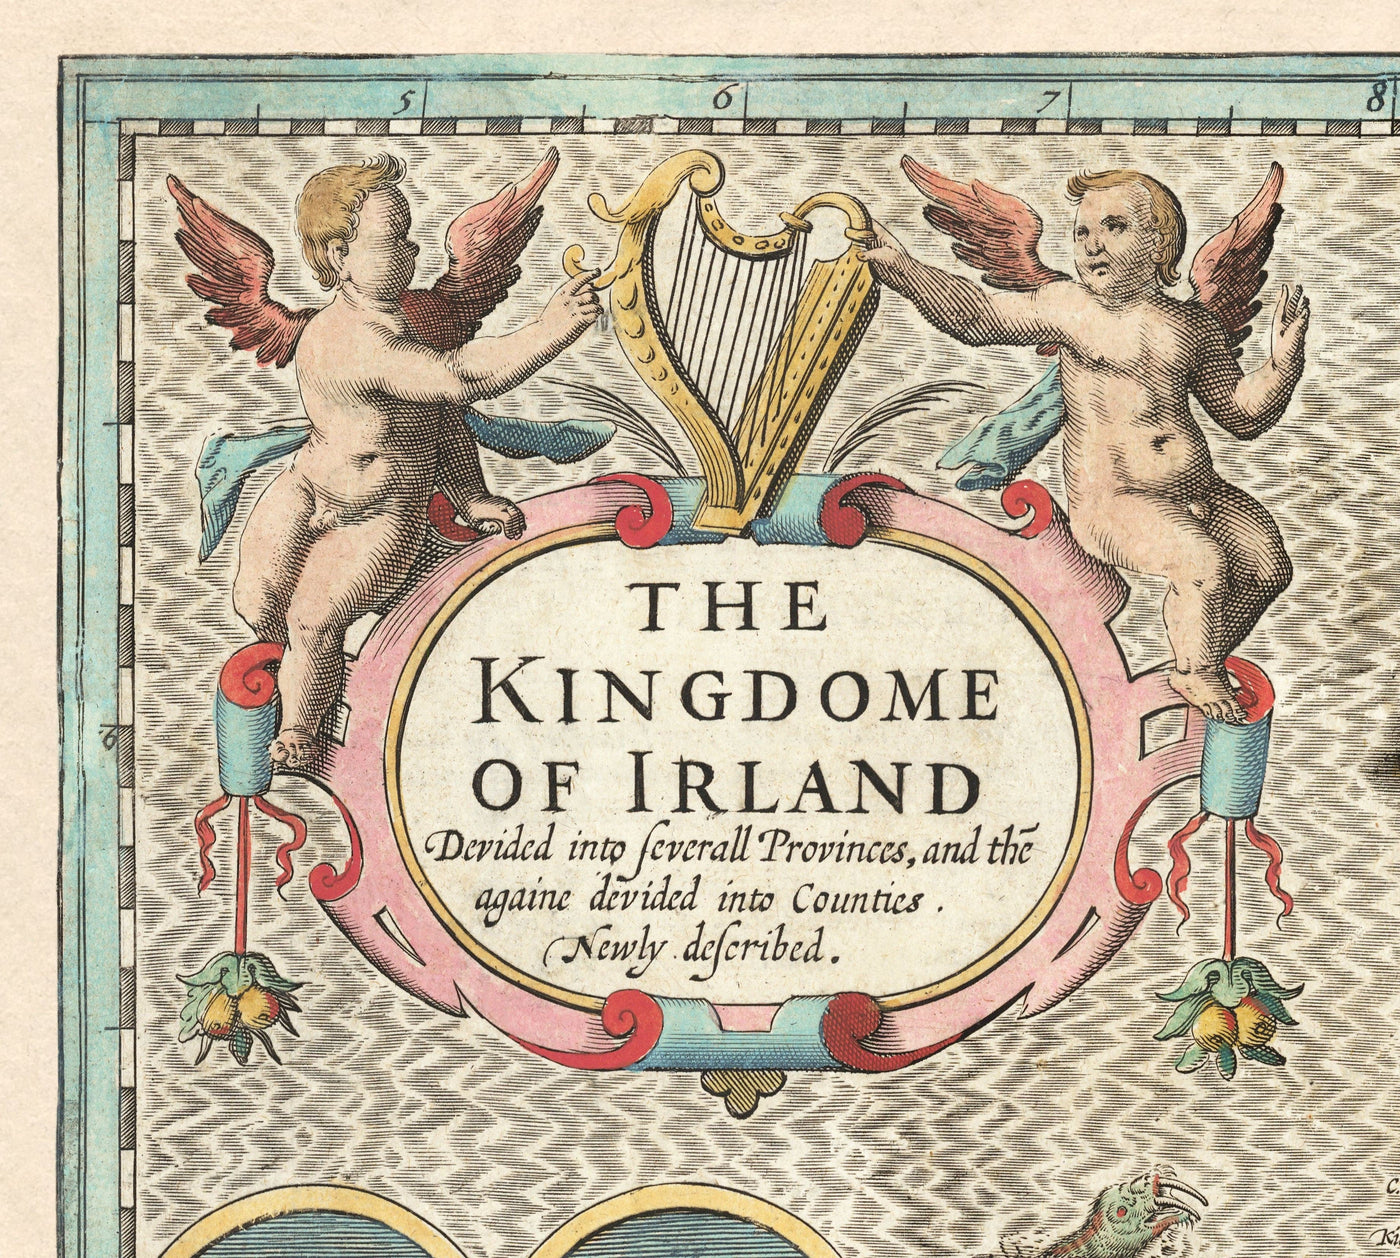 Ancienne carte d'Irlande, Éireann 1611 par John Vitesse - Belle carte vintage antique